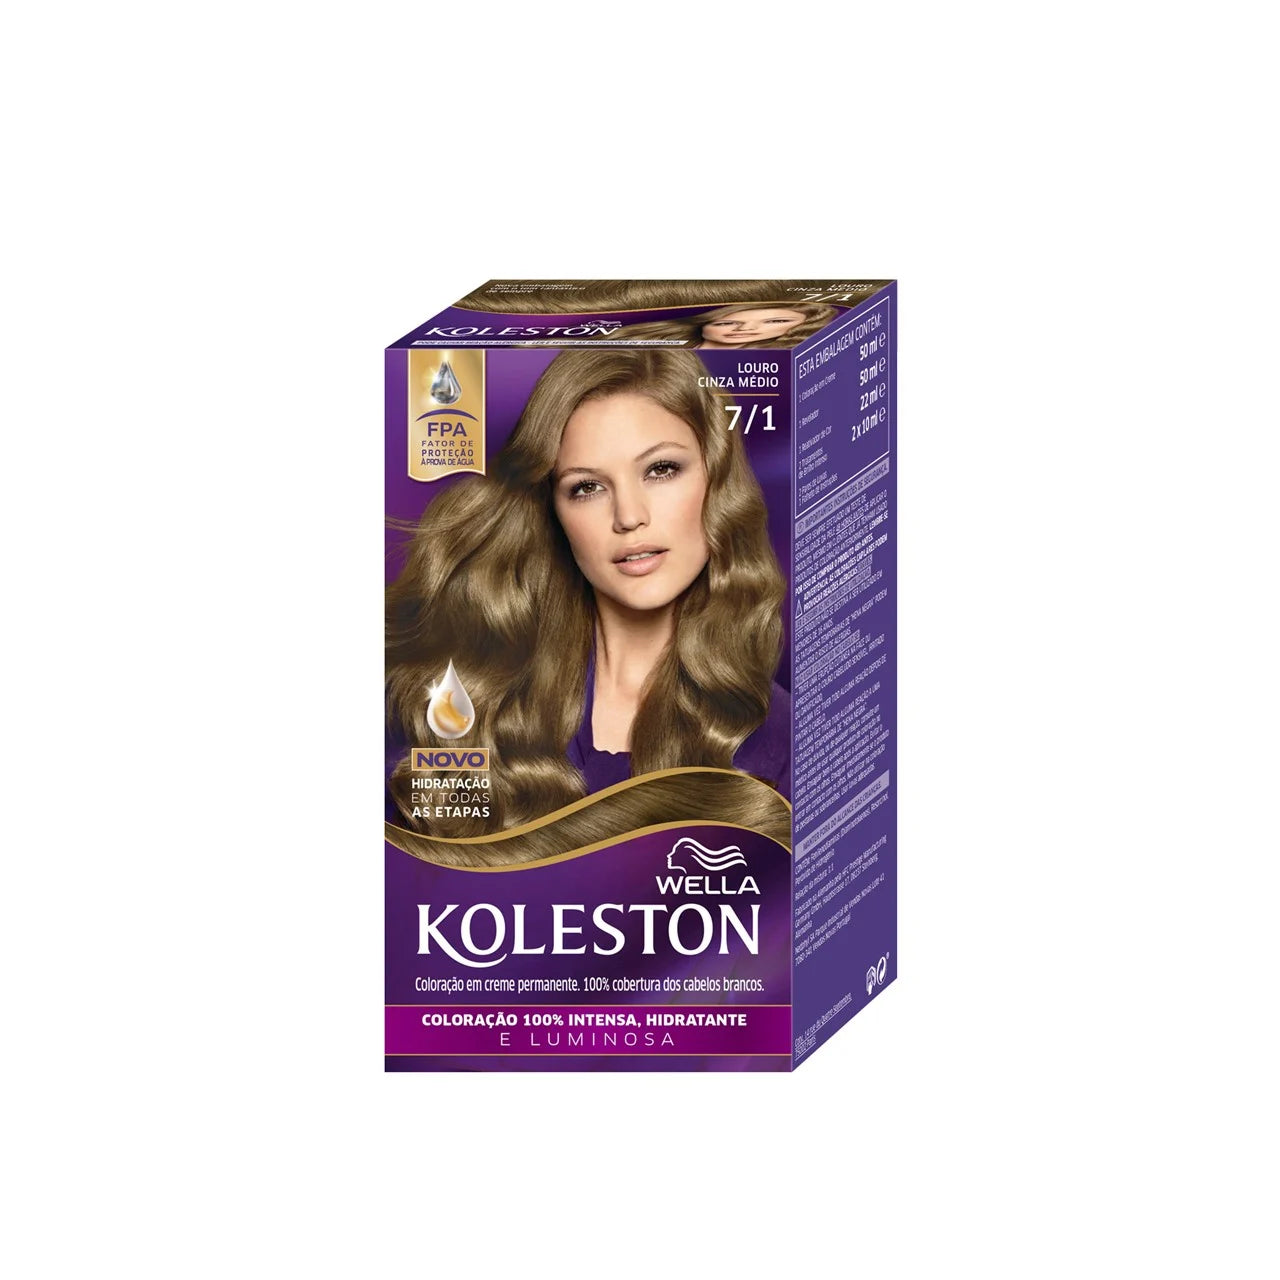 Wella Koleston Permanent Hair Color  7/1 Medium Ash Blonde